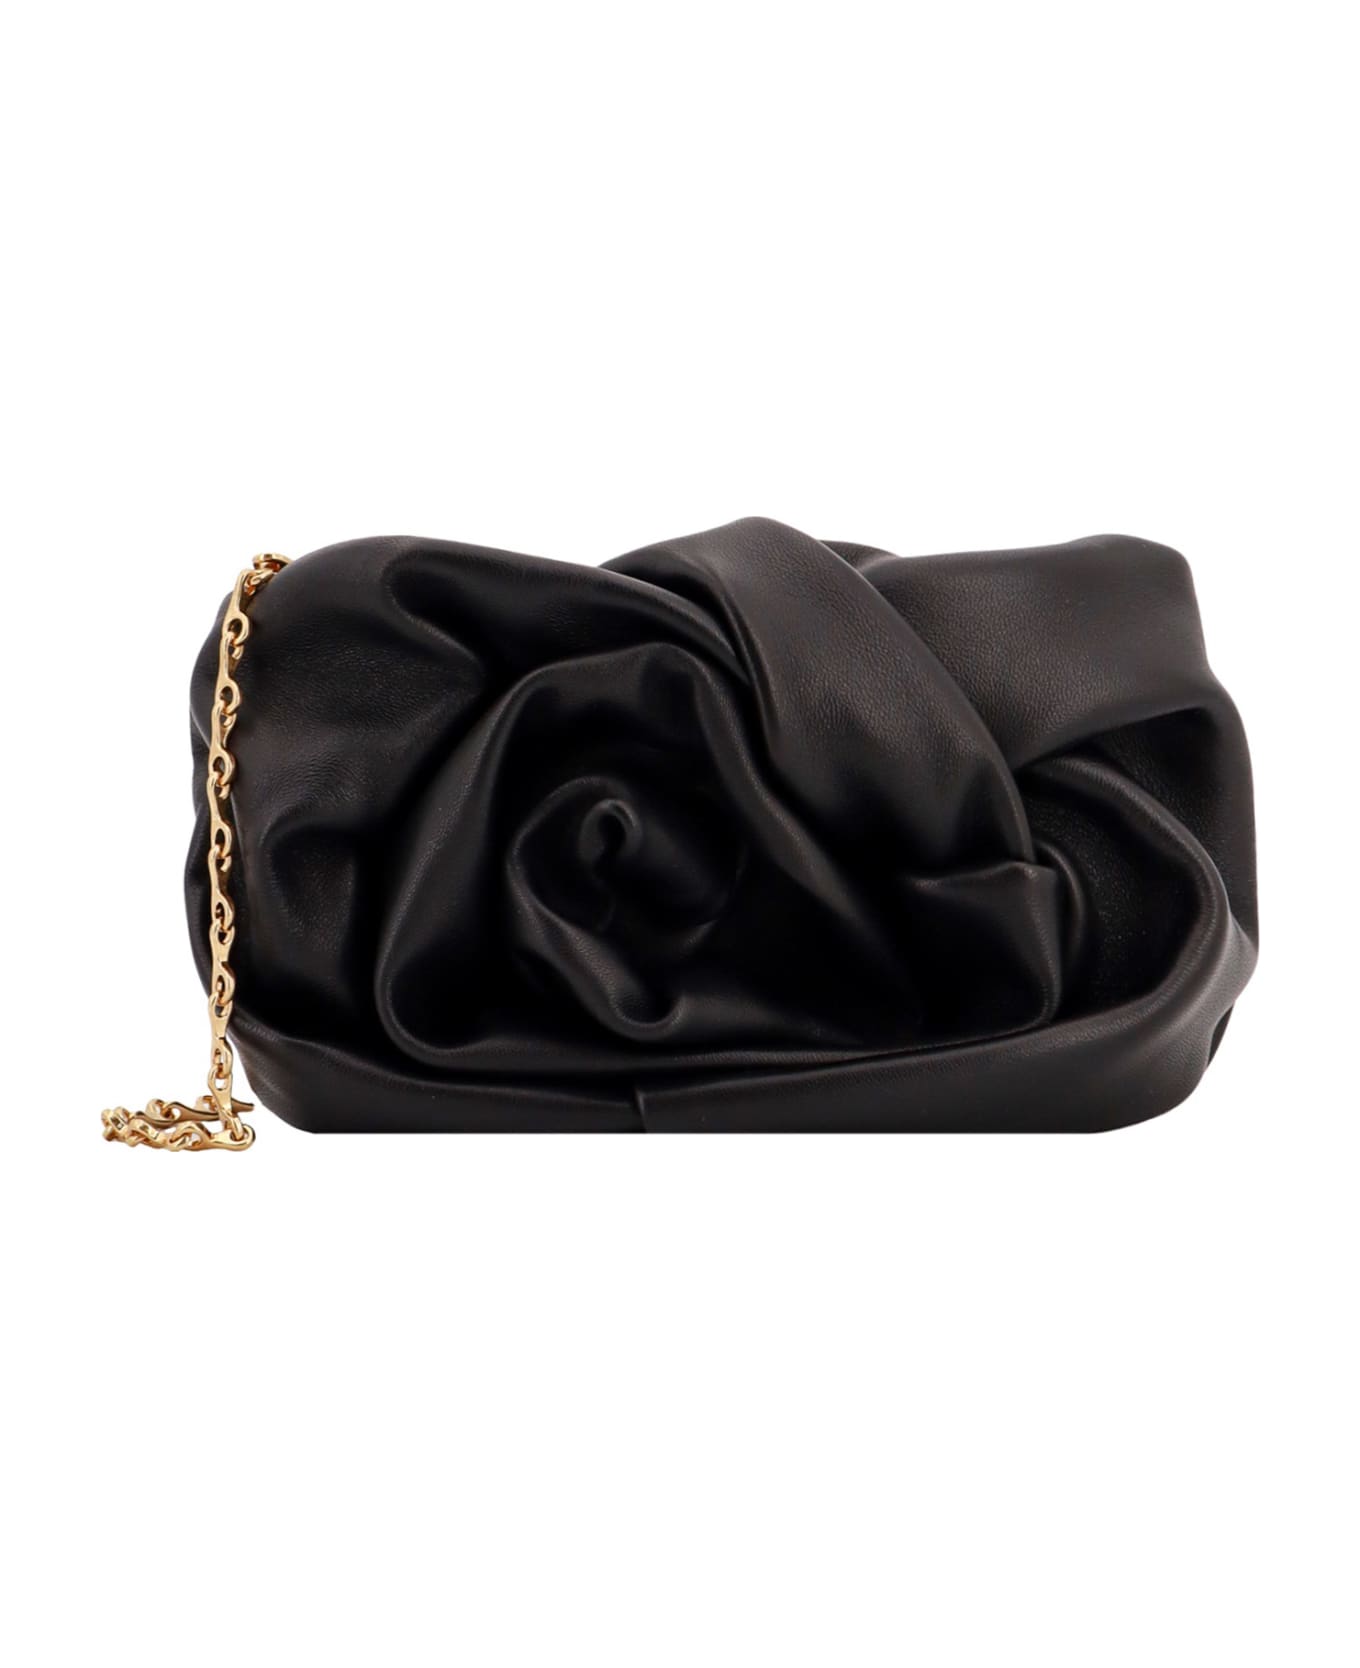 Burberry Rose Clutch Bag - Black